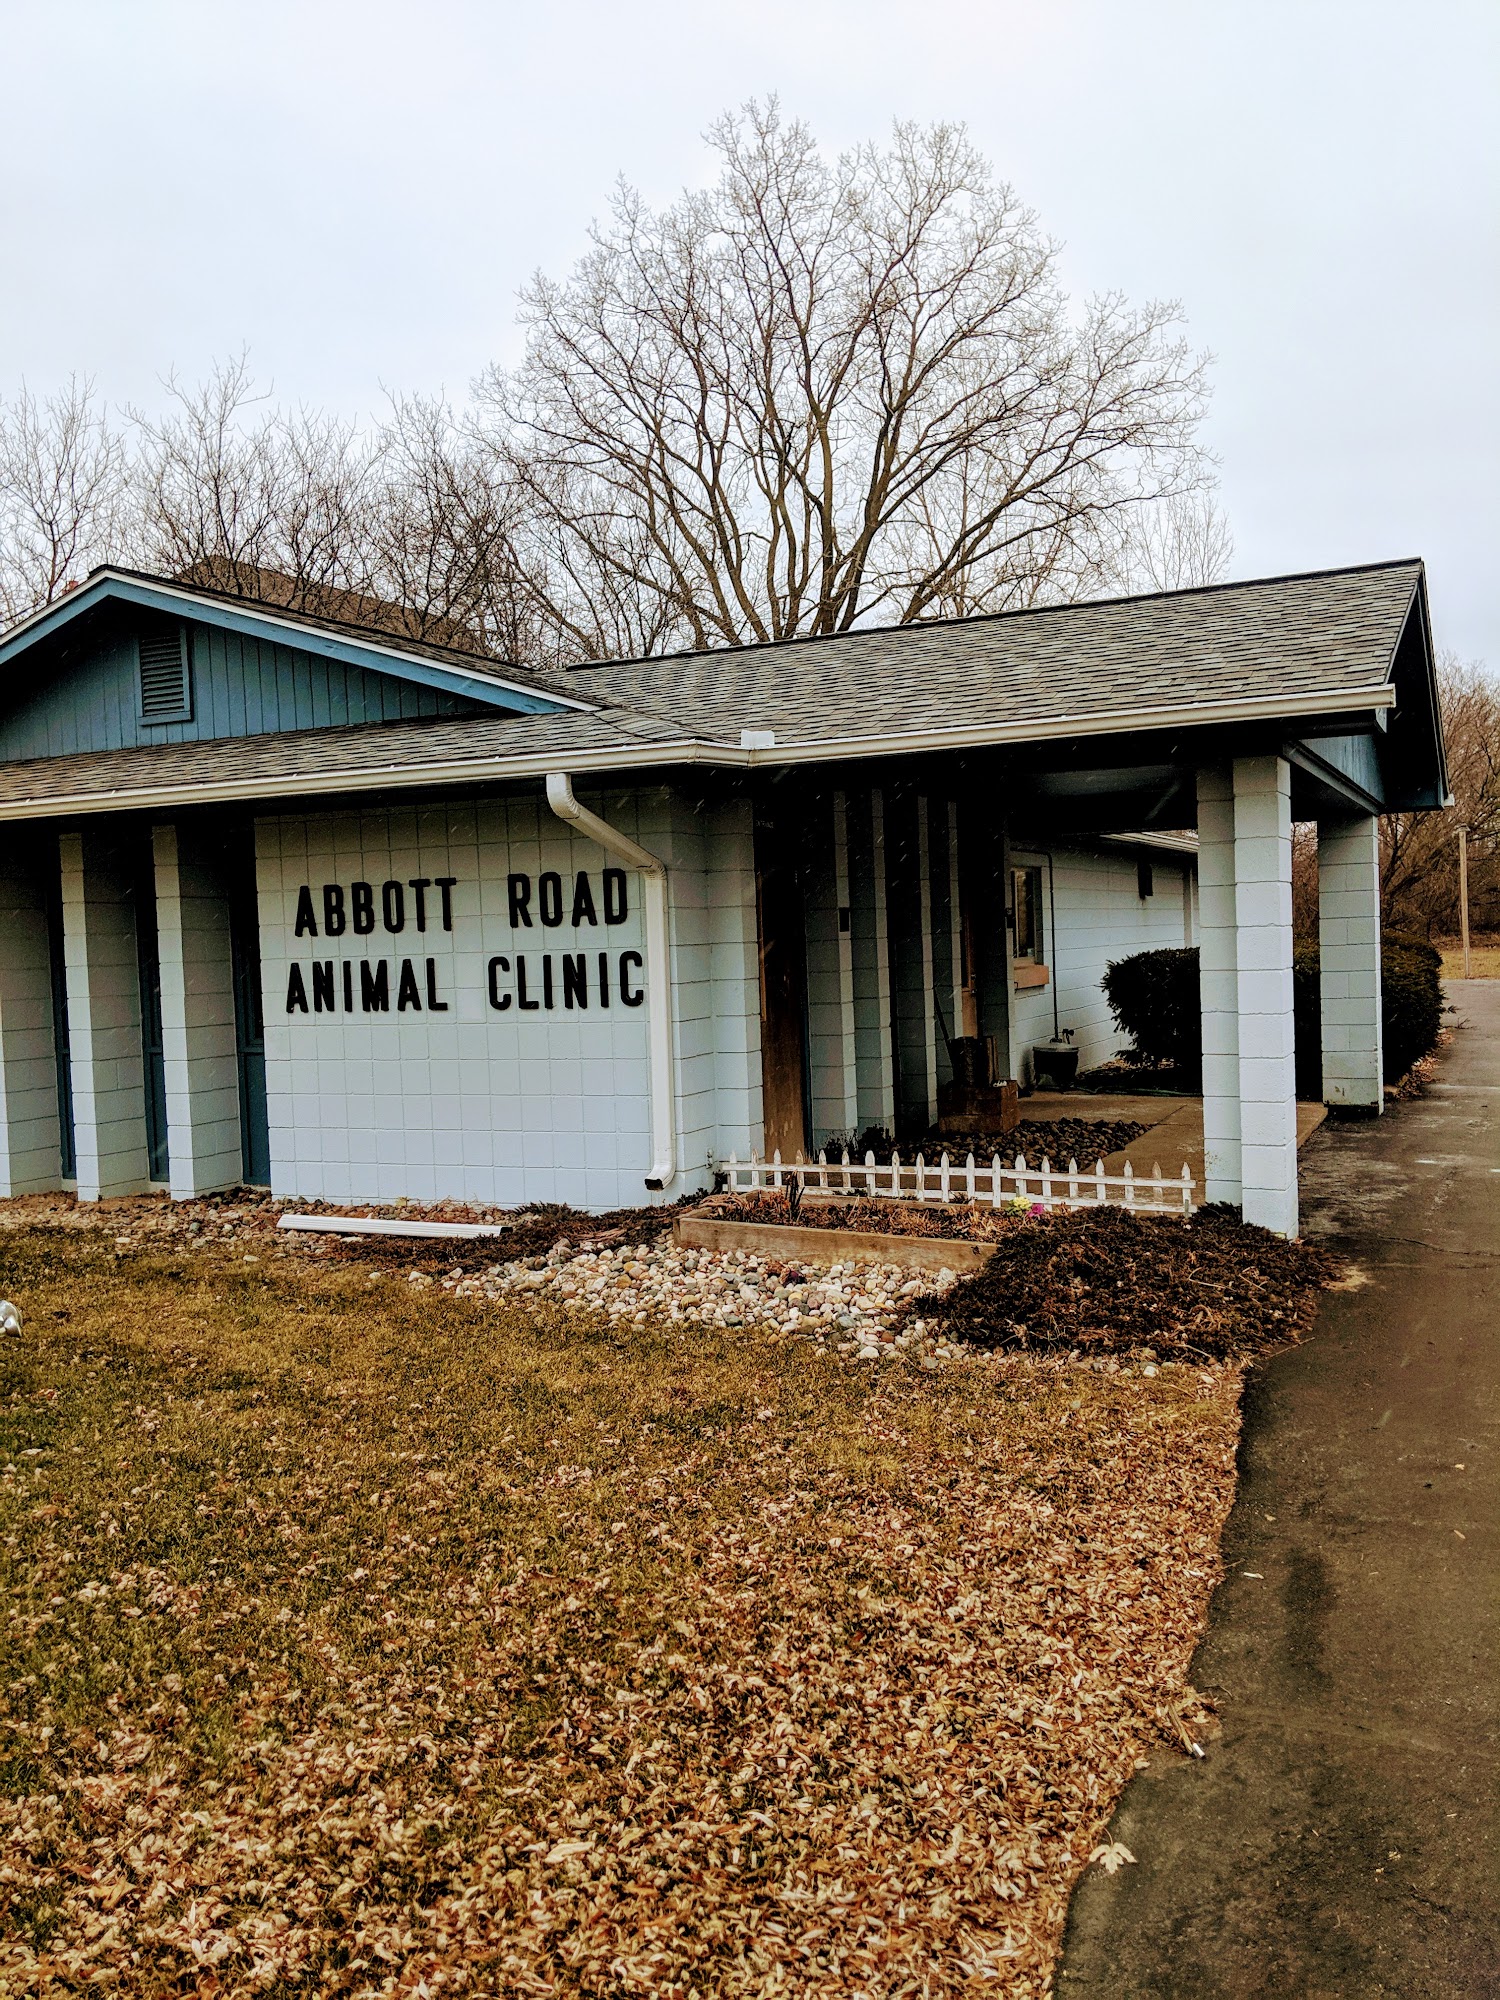 Abbott Road Animal Clinic